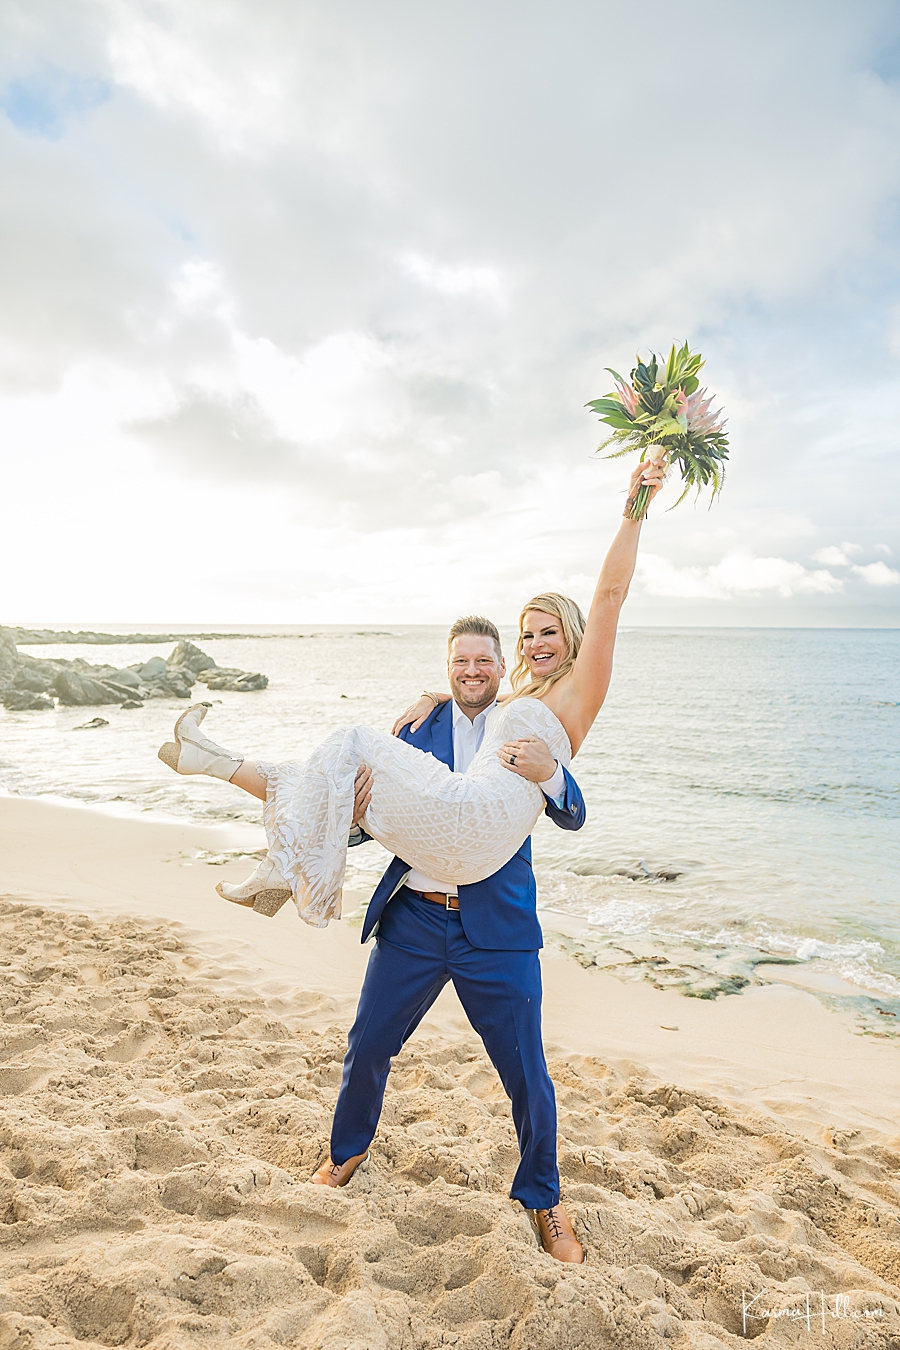 sunset wedding beach portraits in hawaii